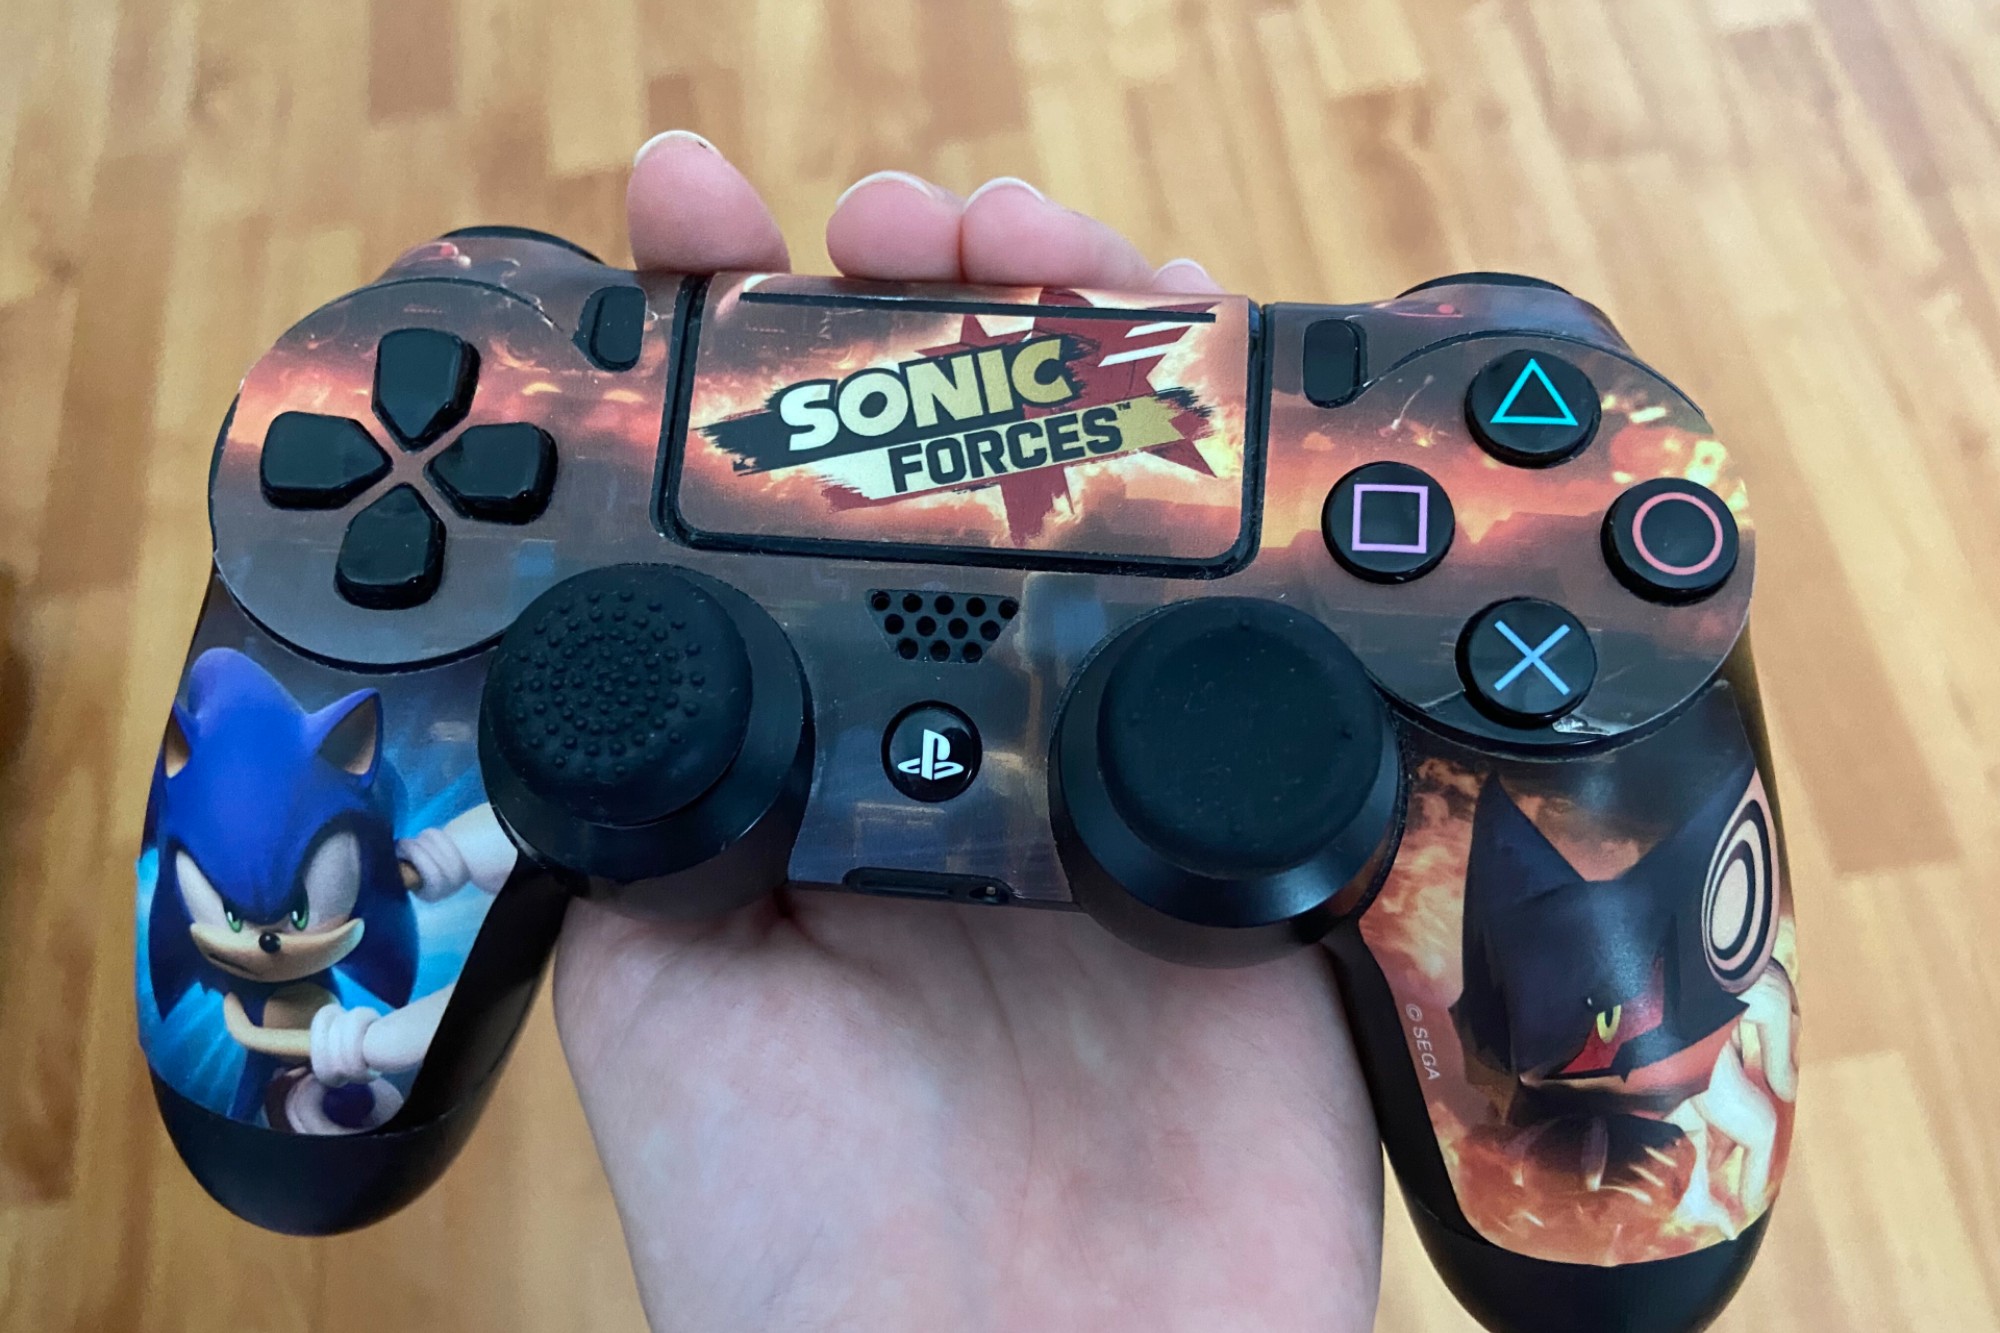 Sonic Frontiers Digital Ps4 & Ps5 - HF Games